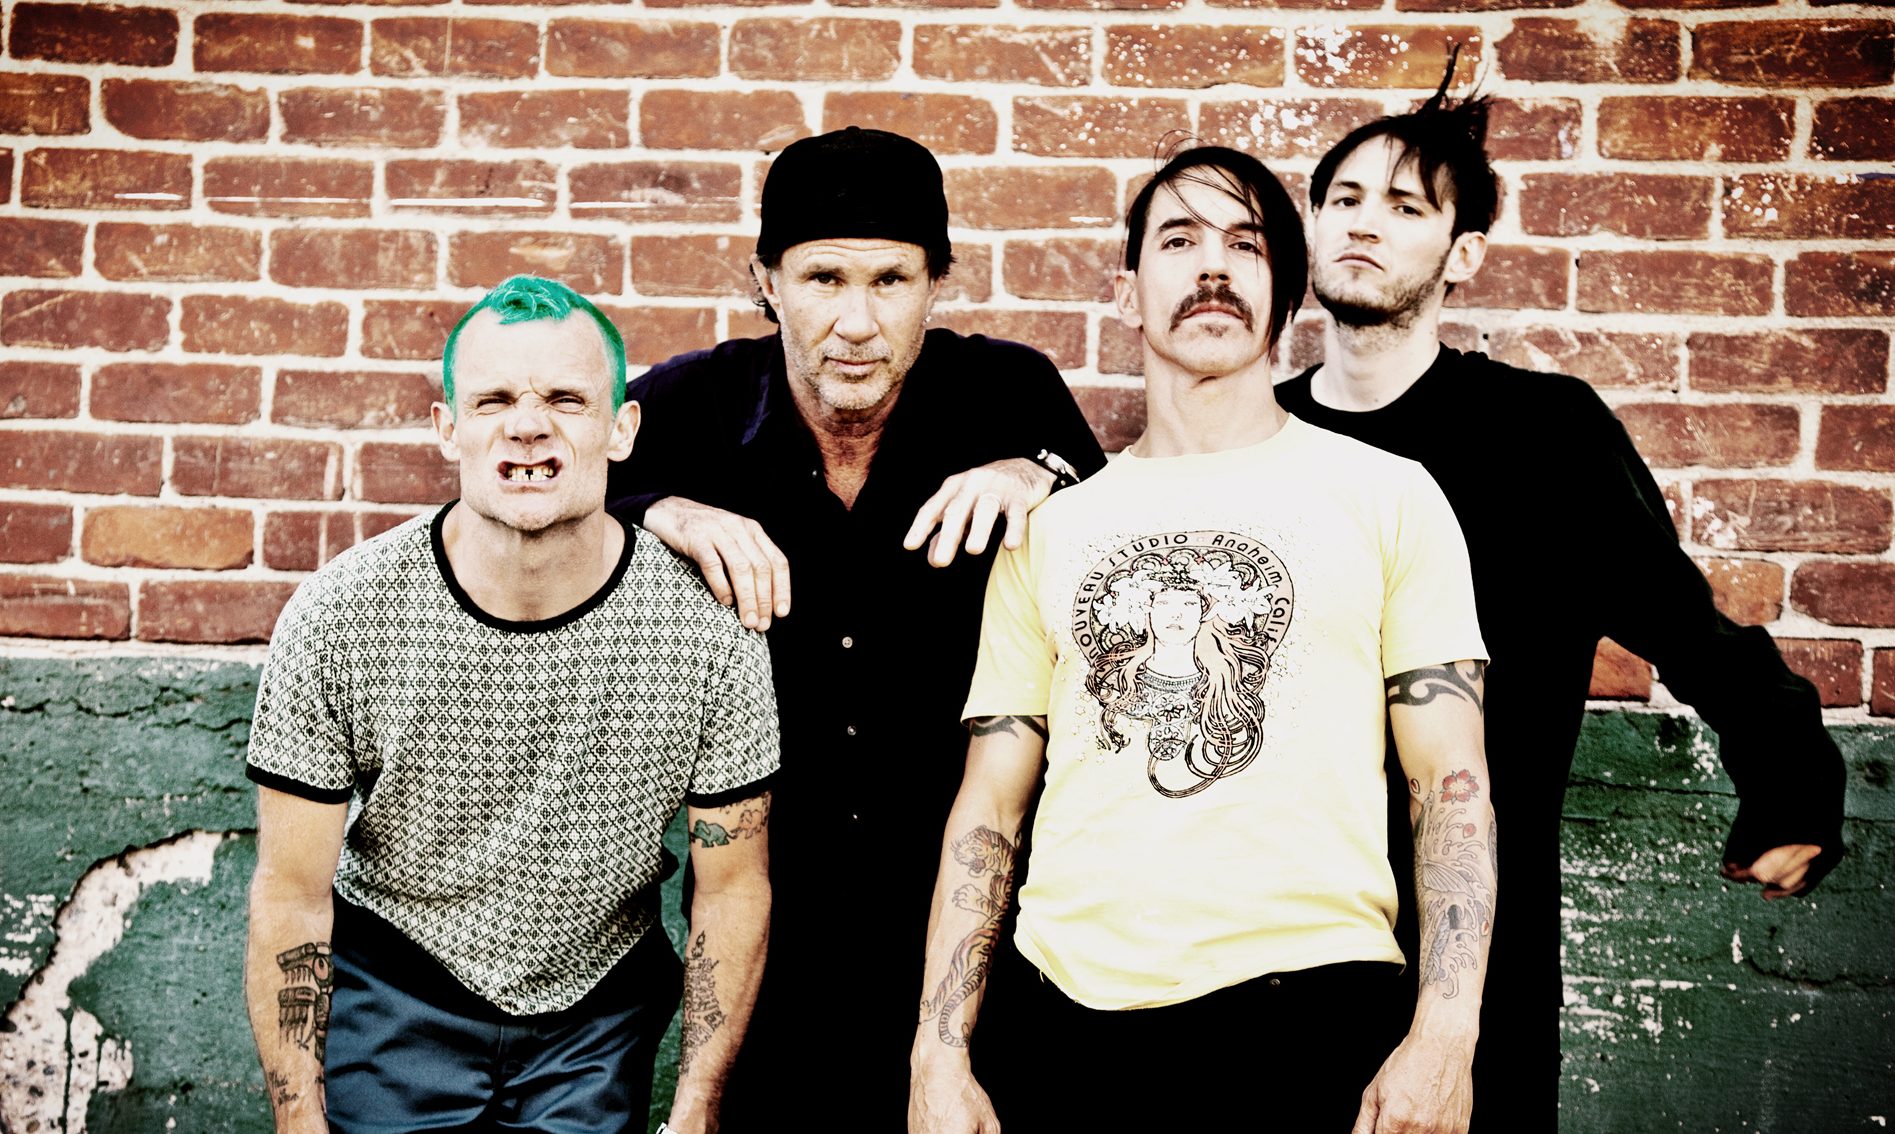 En Fox News califican a Red Hot Chili Peppers como “la peor banda del mundo”